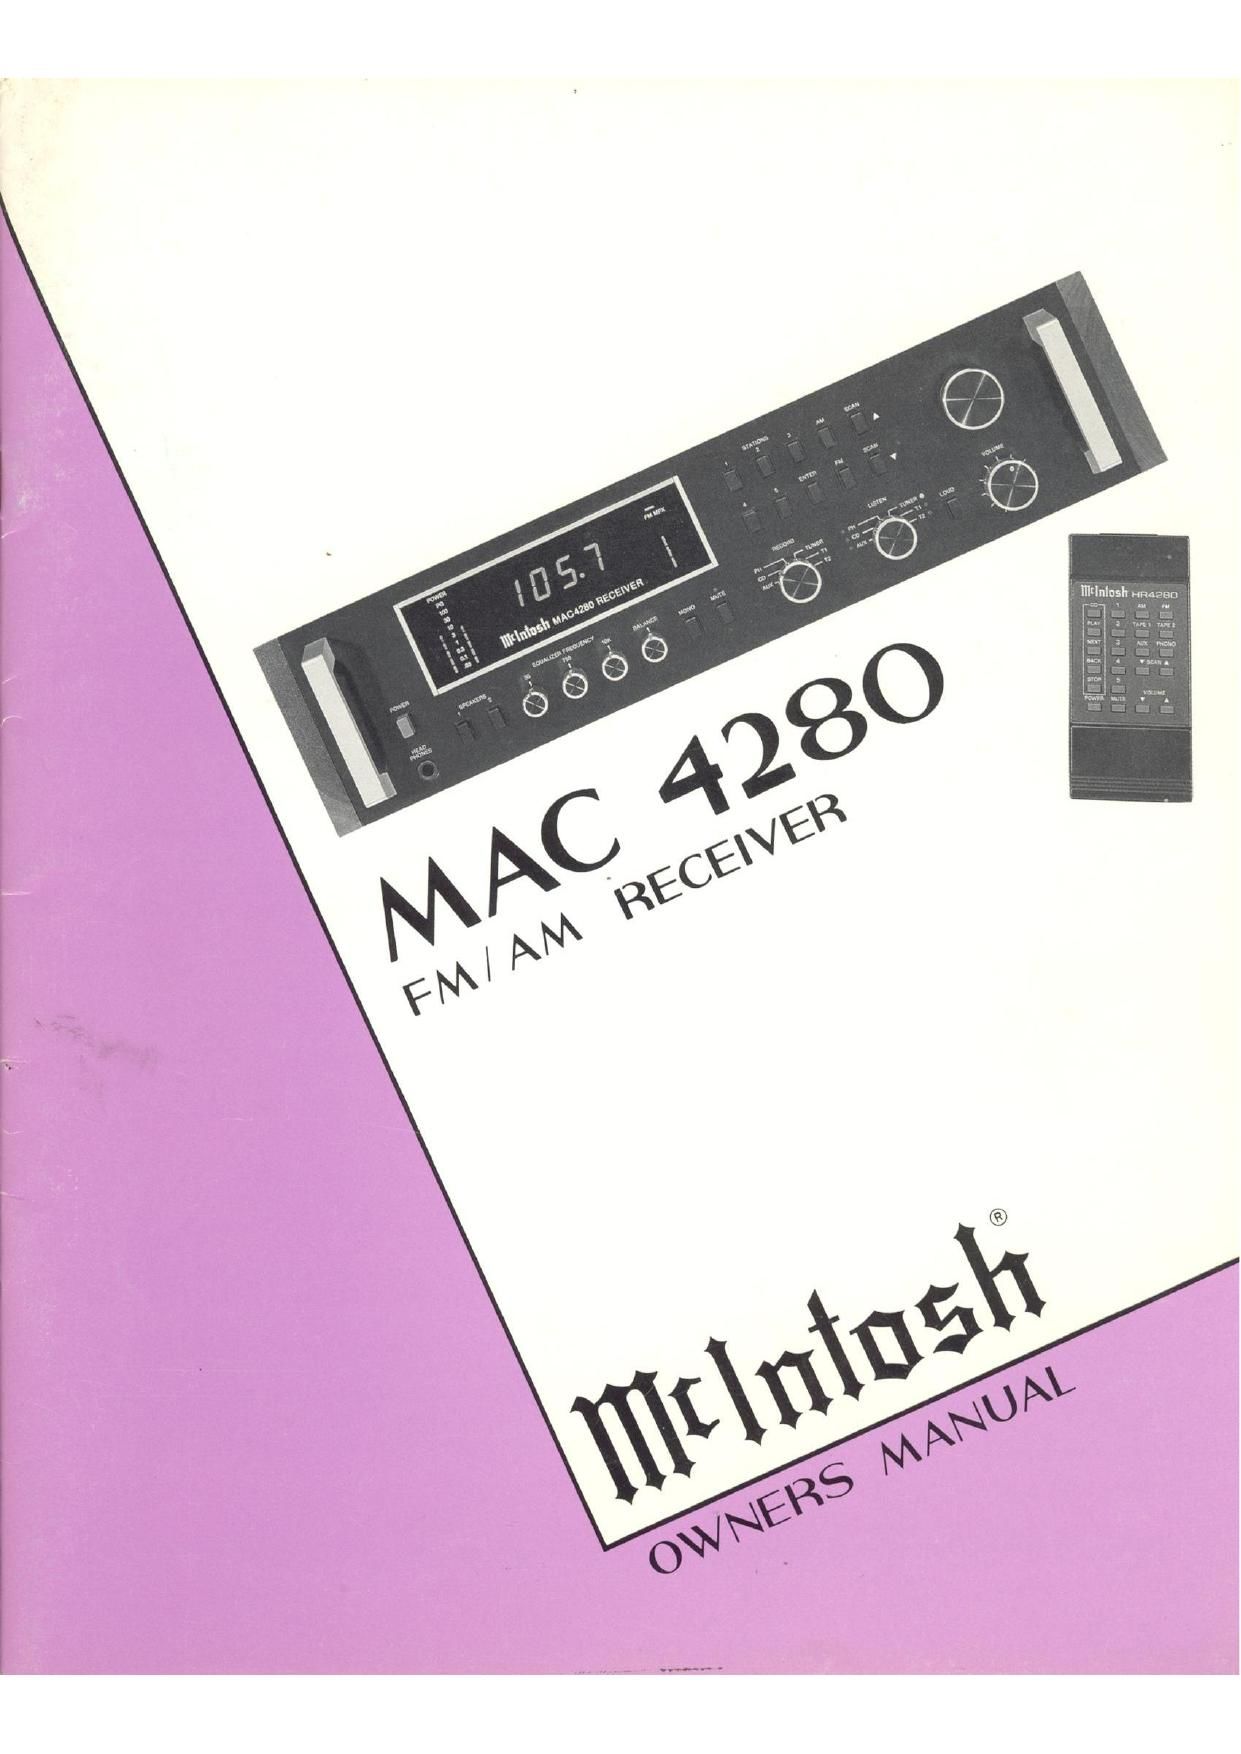 McIntosh MAC 4280 Owners Manual